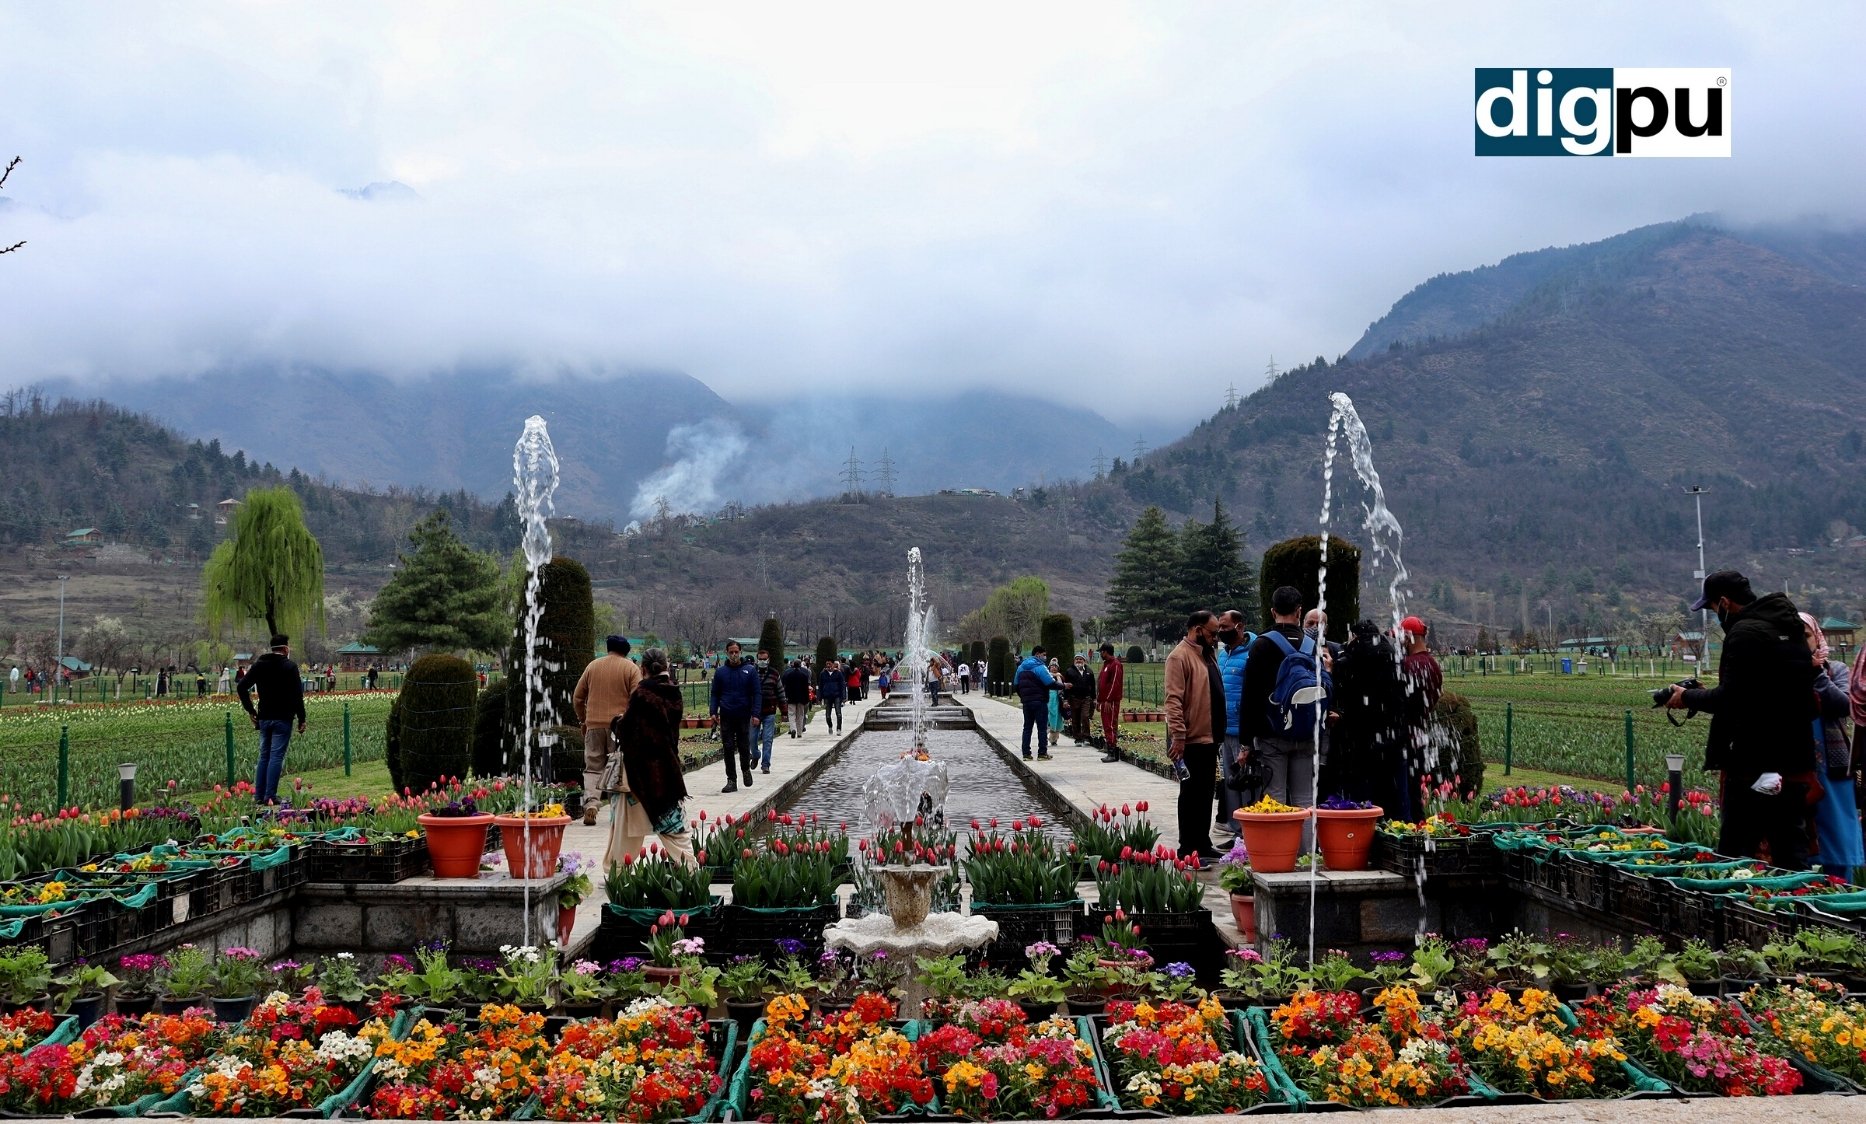 Tulip Garden opens in Srinagar after PM Modi calls it J&K’s ‘Special Day’ - Digpu News